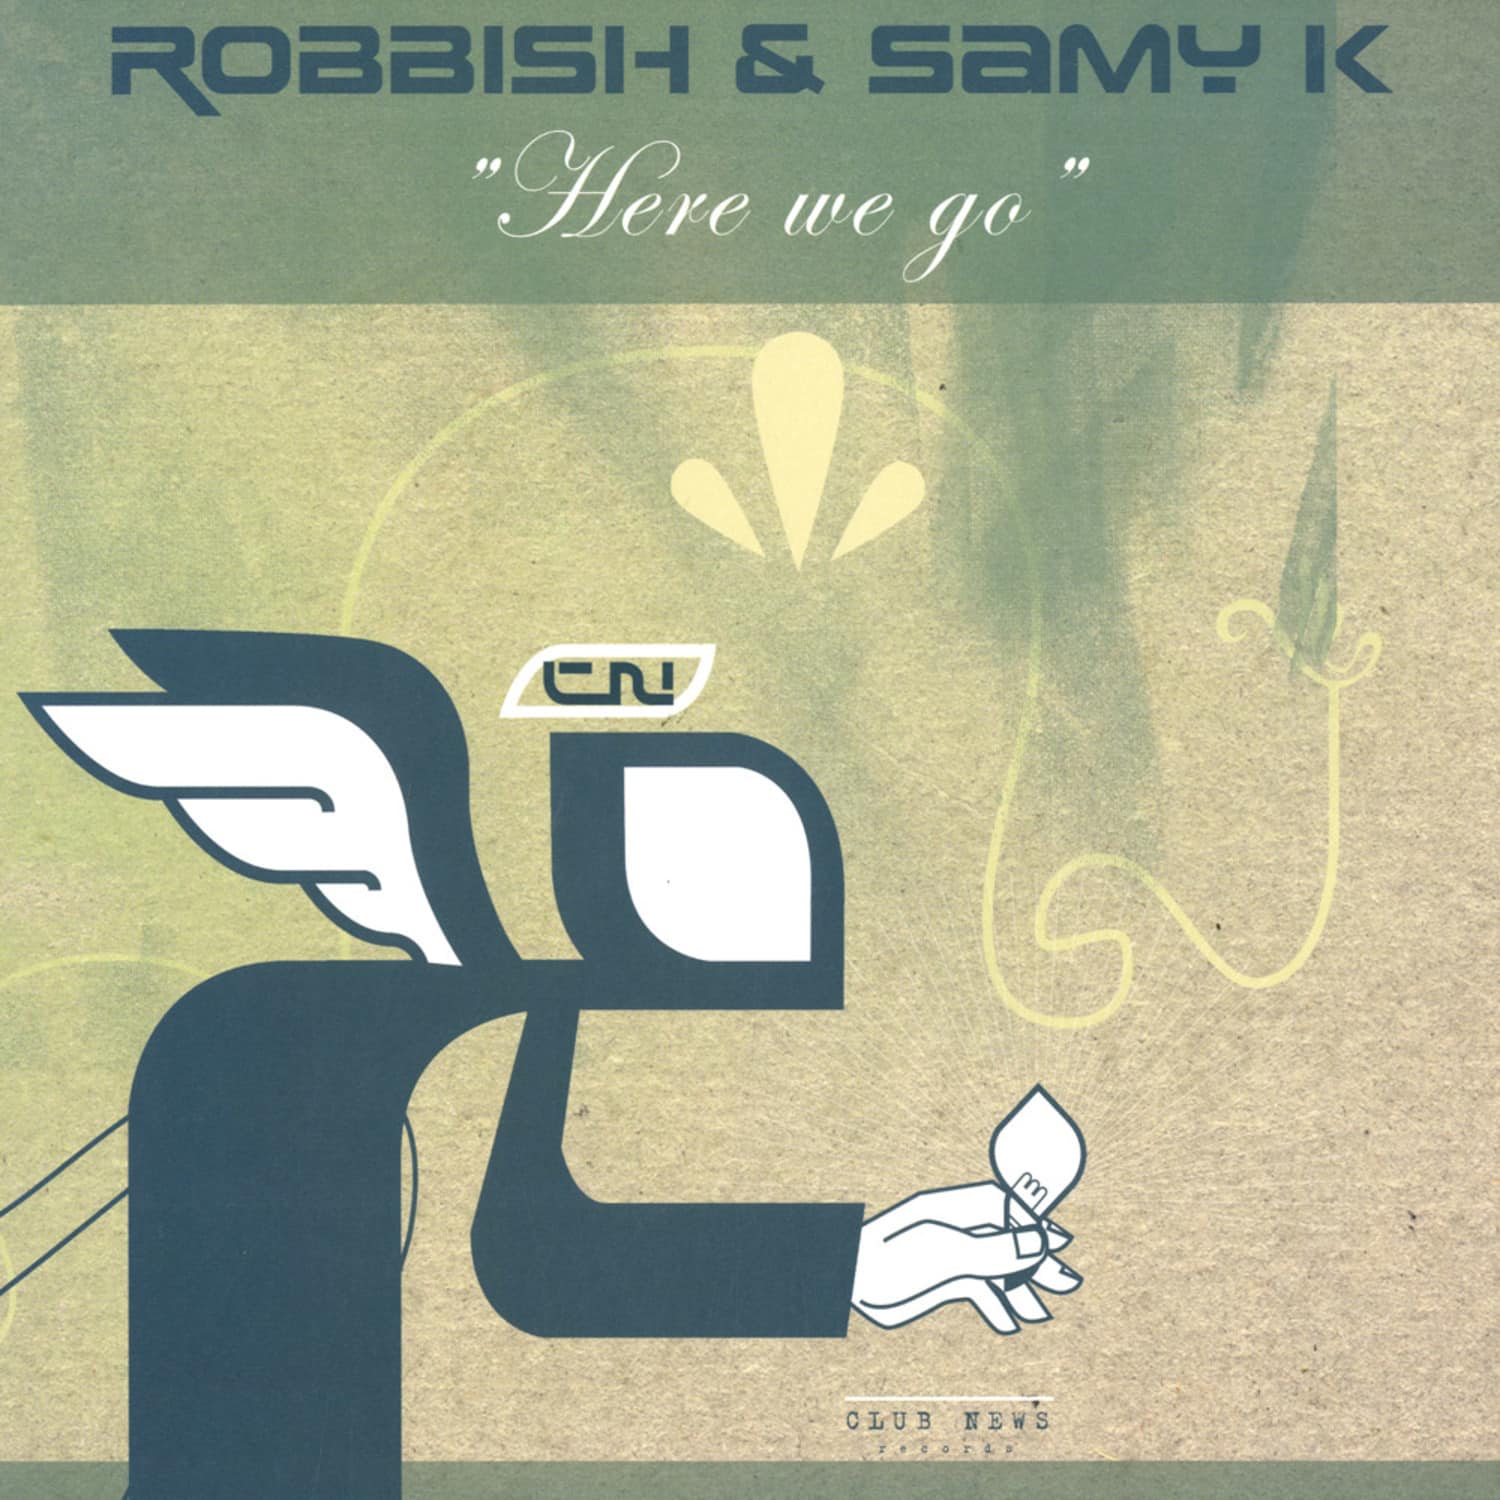 Robbish & Samy K - HERE WE GO